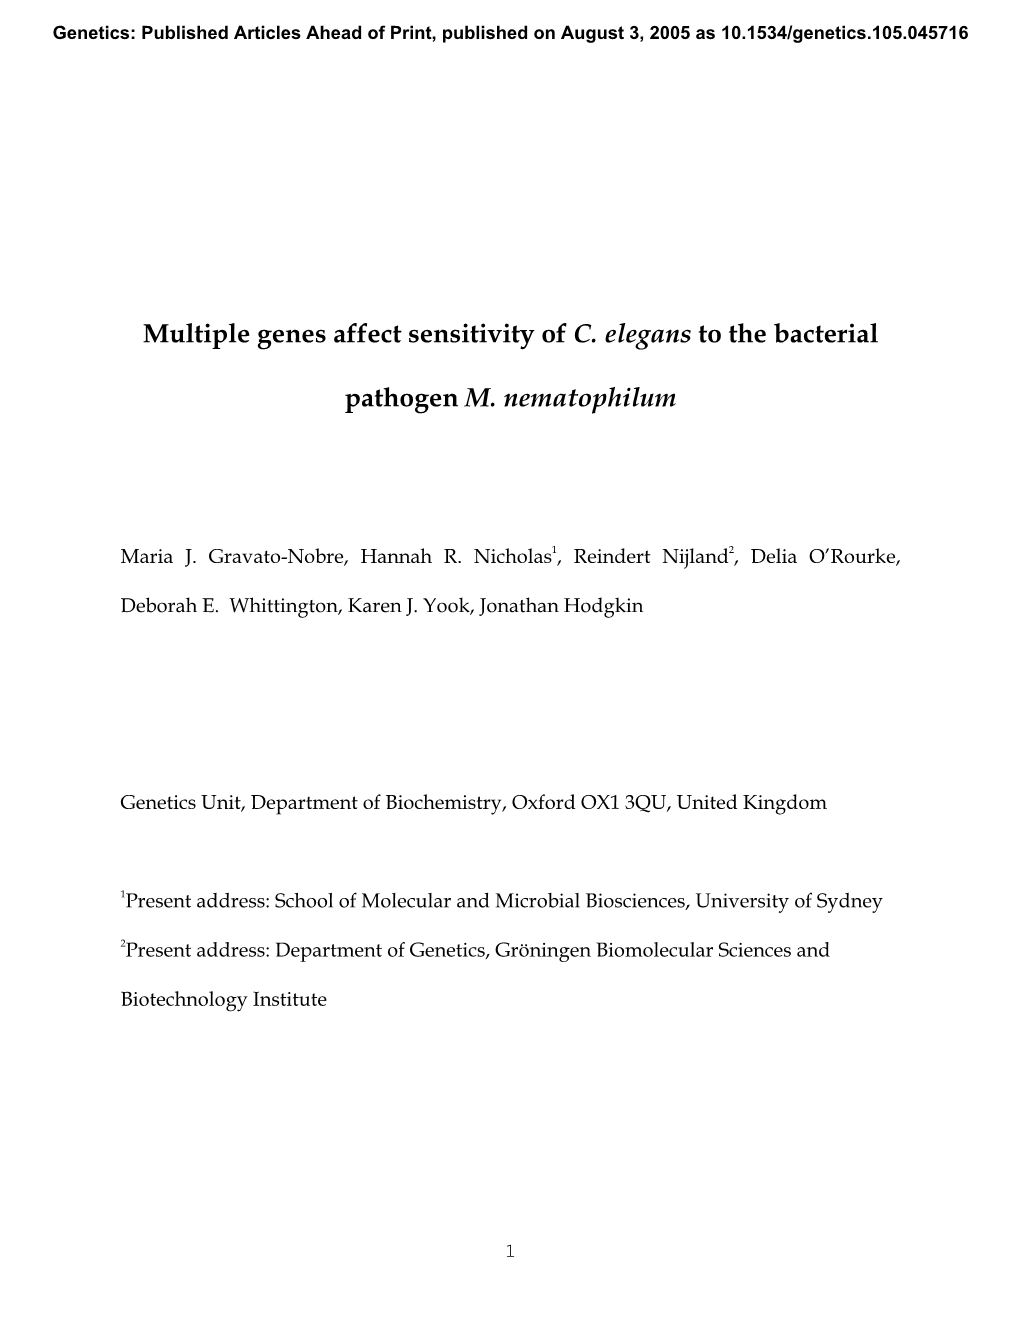 Multiple Genes Affect Sensitivity of C. Elegans to the Bacterial Pathogen M